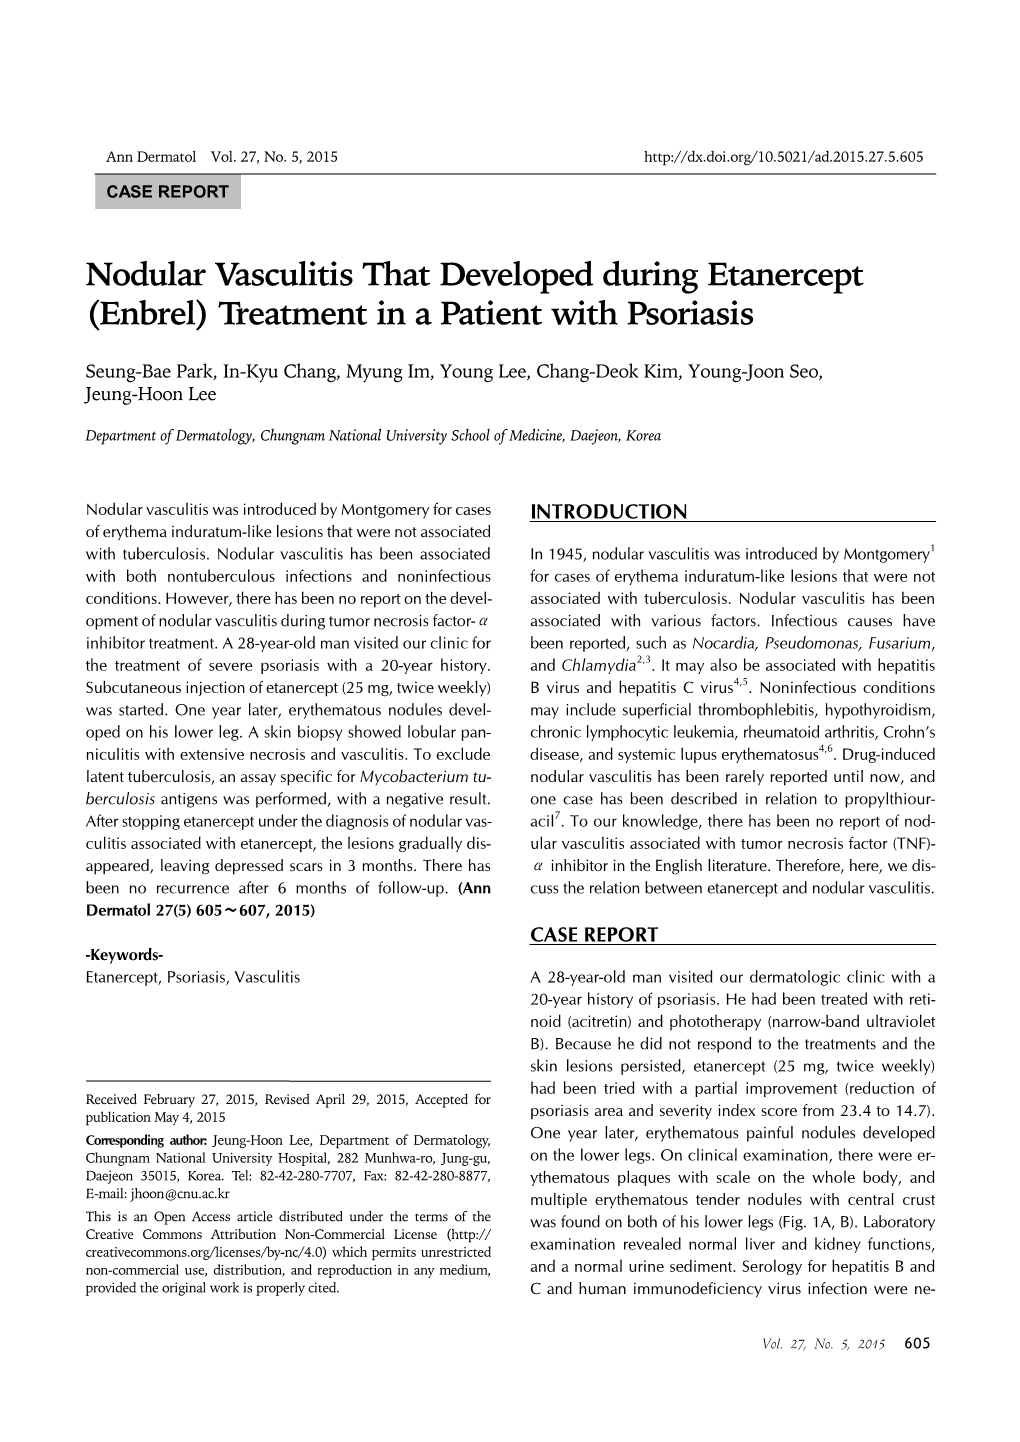 Nodular Vasculitis That Developed During Etanercept (Enbrel) Treatment in a Patient with Psoriasis